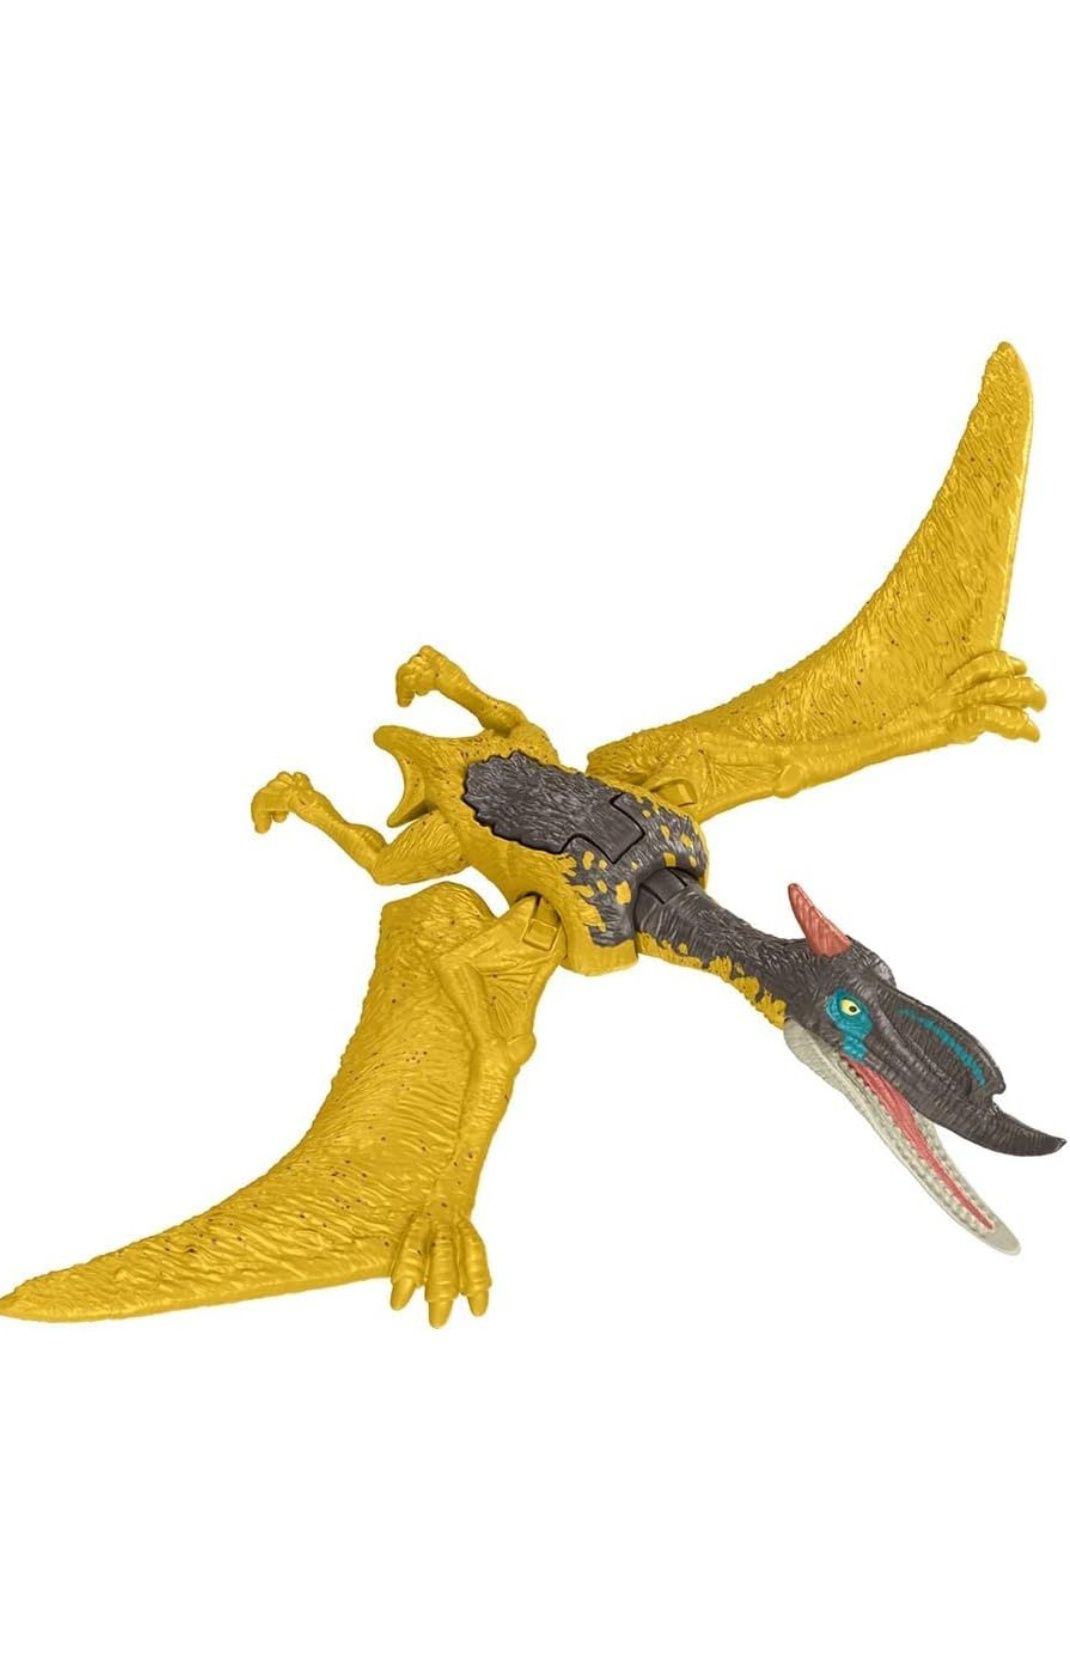 Dsungaripterus Jurassic world динозавр Mattel